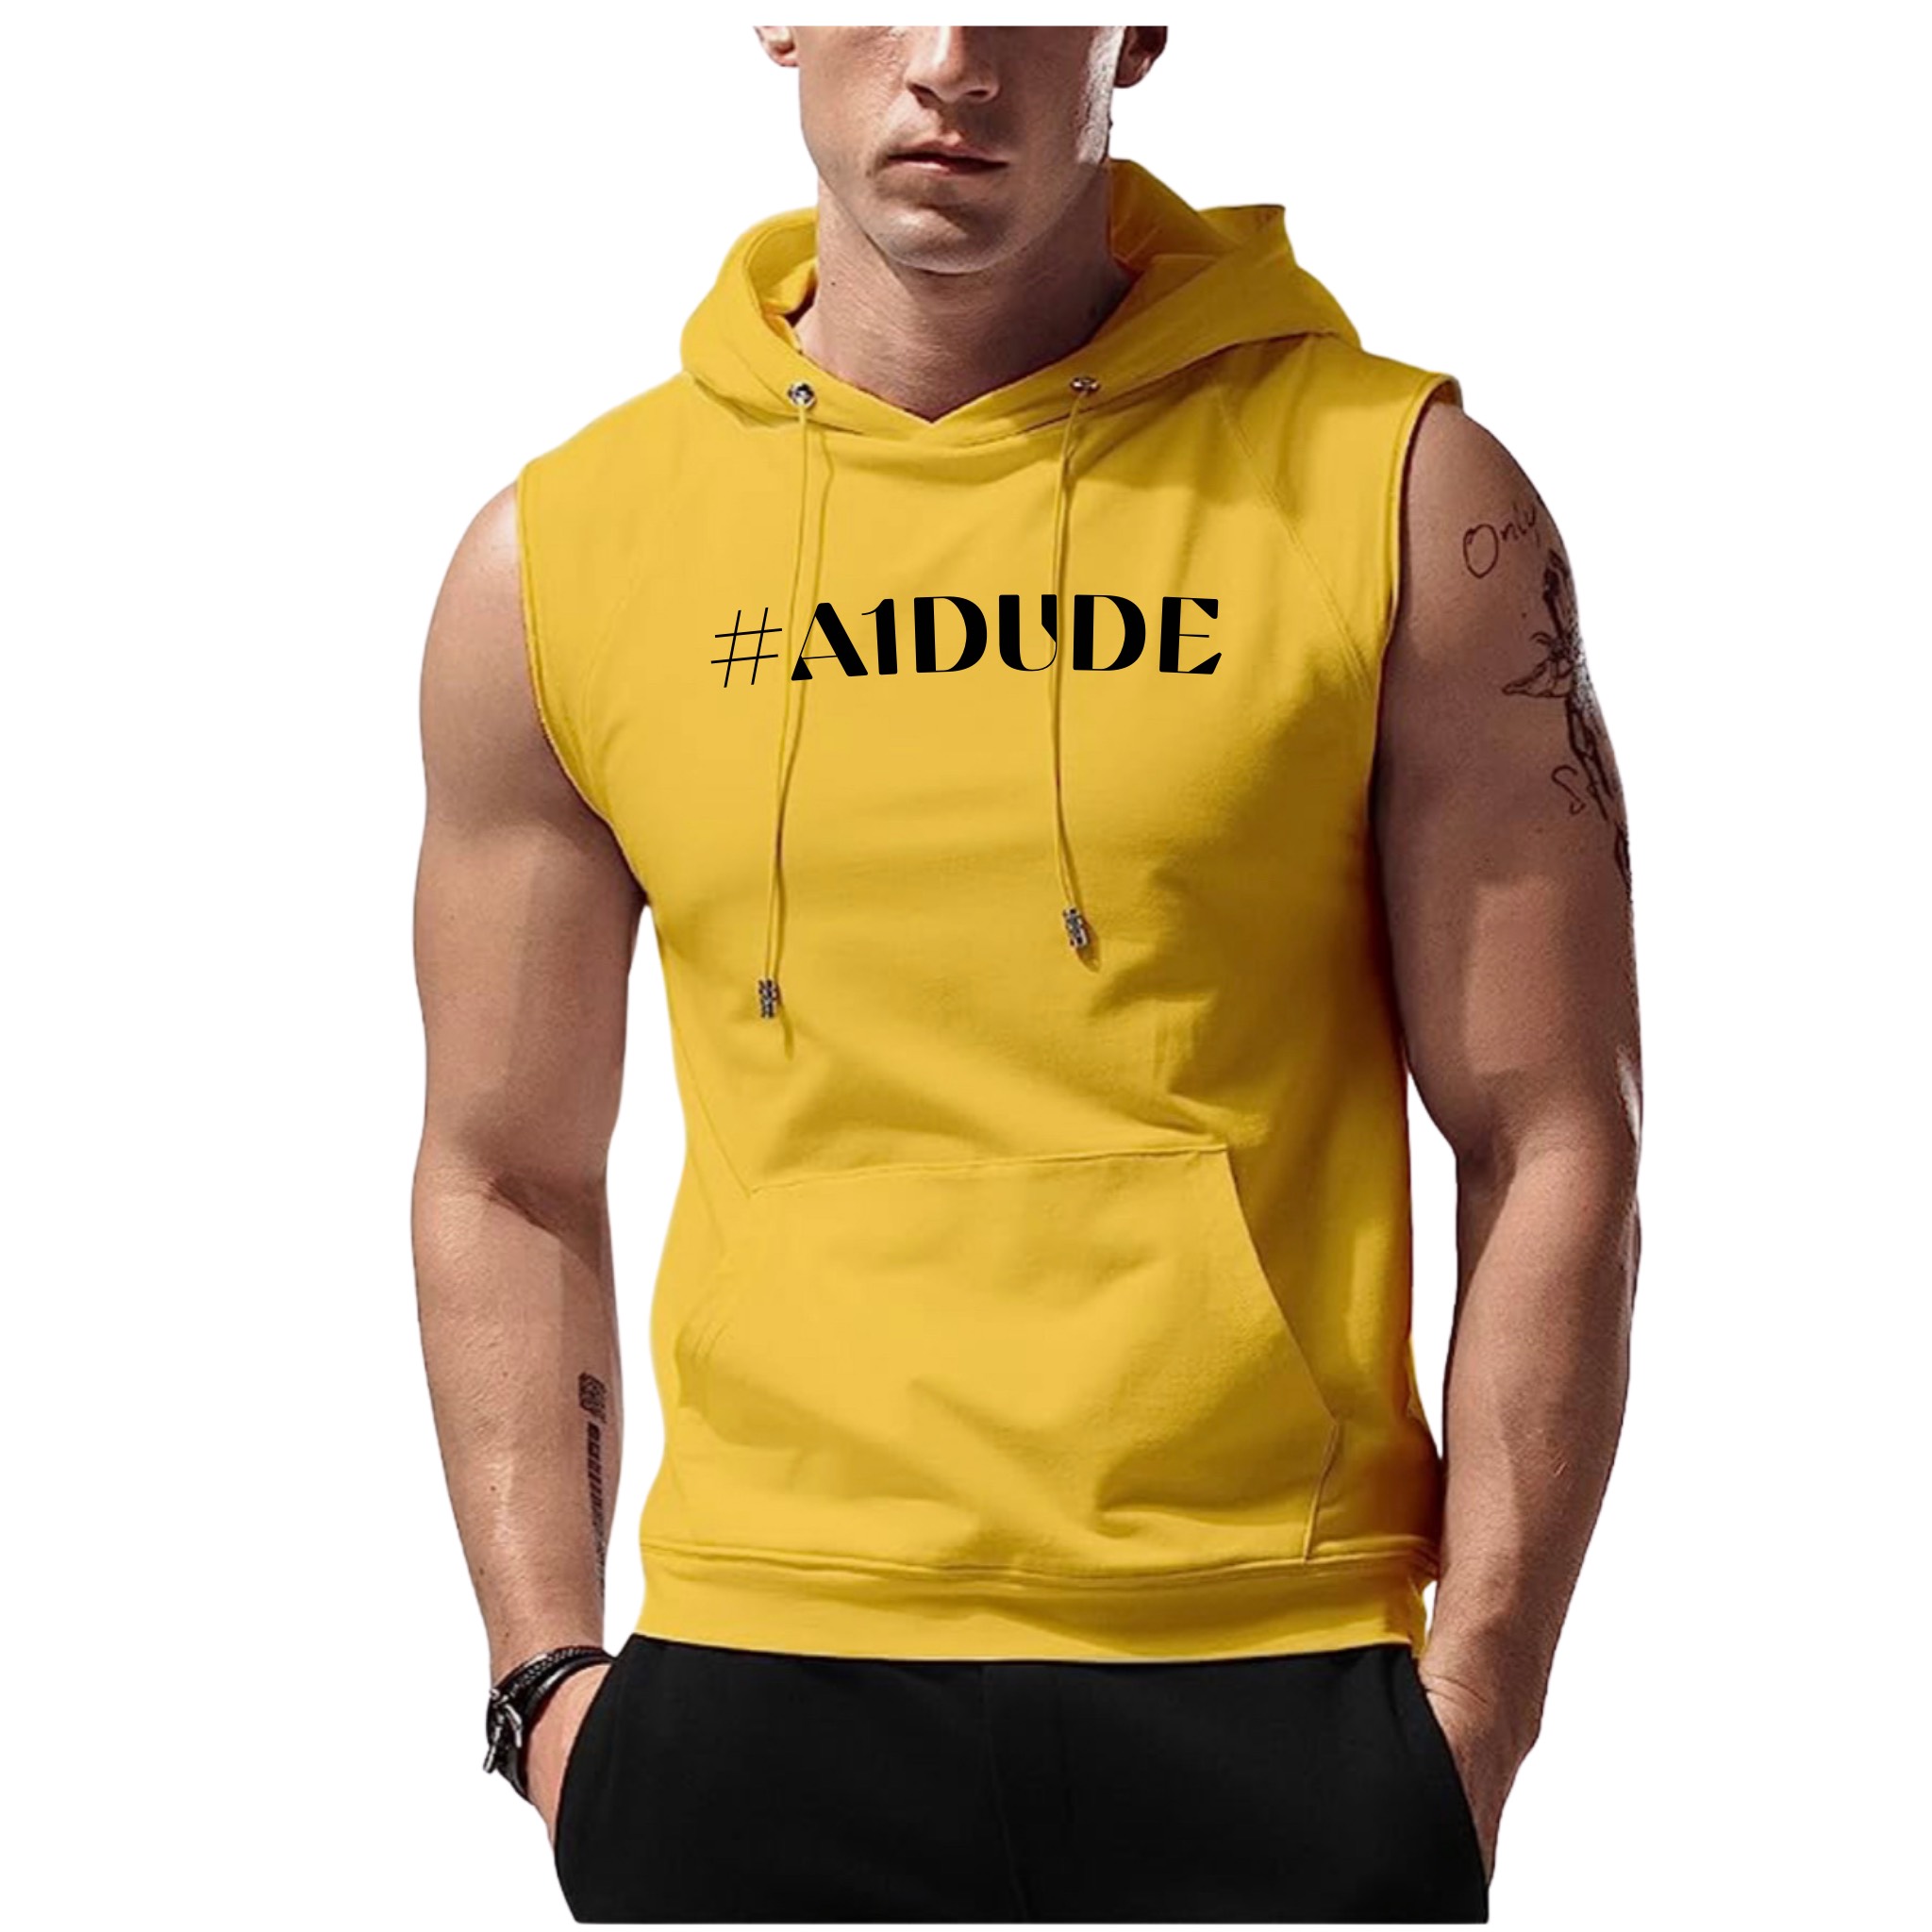 #A1DUDE - Gold & Black Sleeveless Hoodie